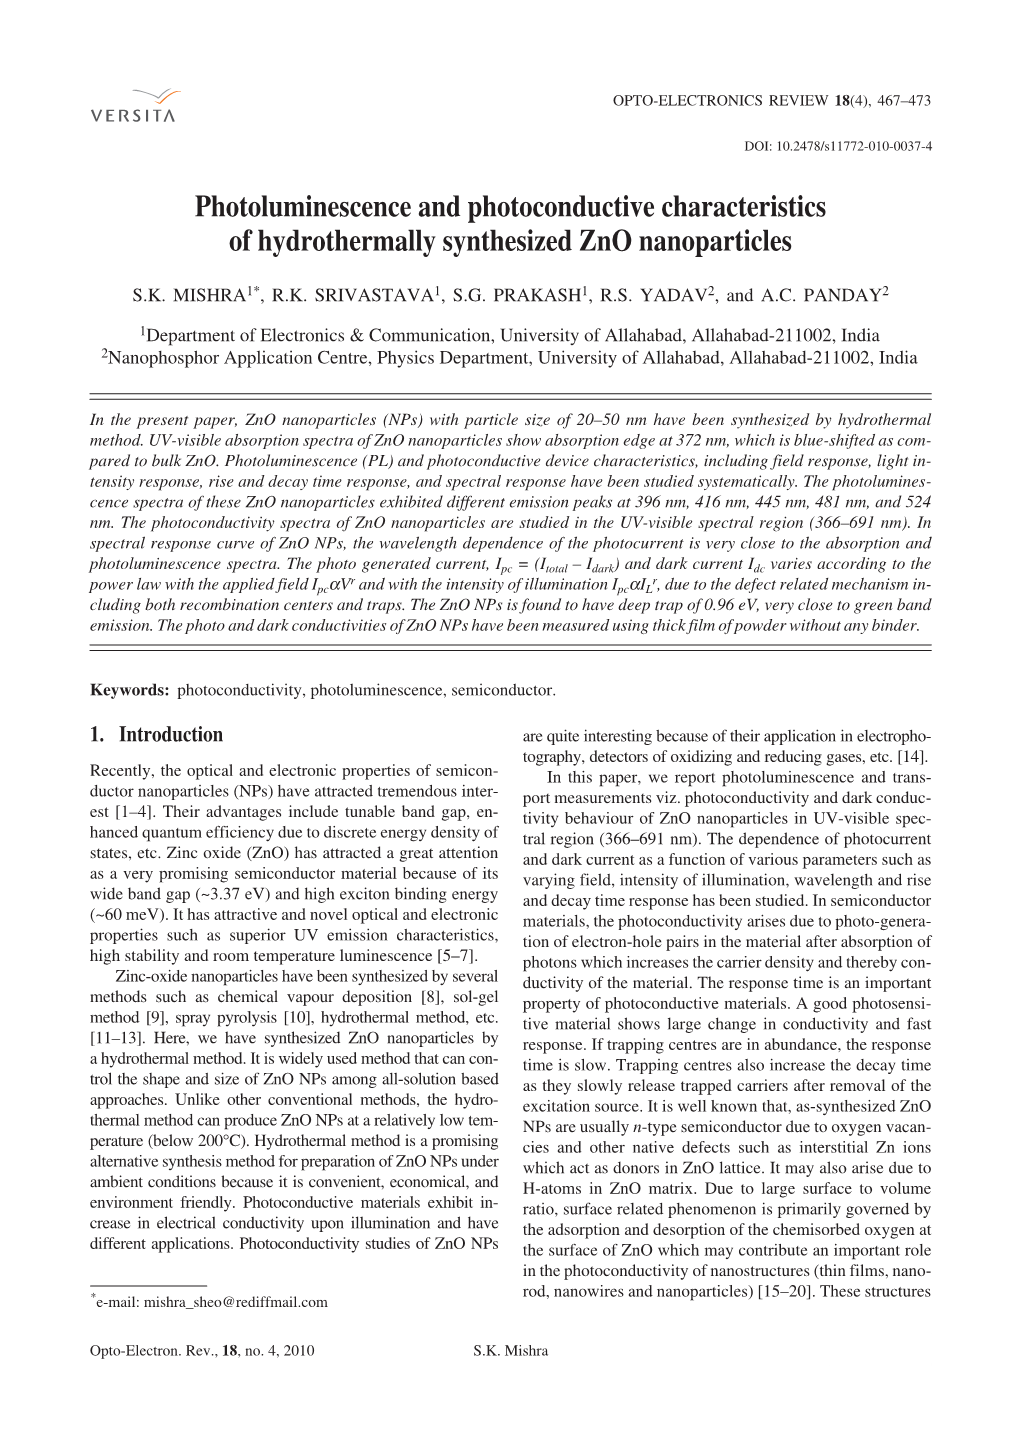 Photoluminescence and Photoconductive Characteristics of Hydrothermally Synthesized Zno Nanoparticles